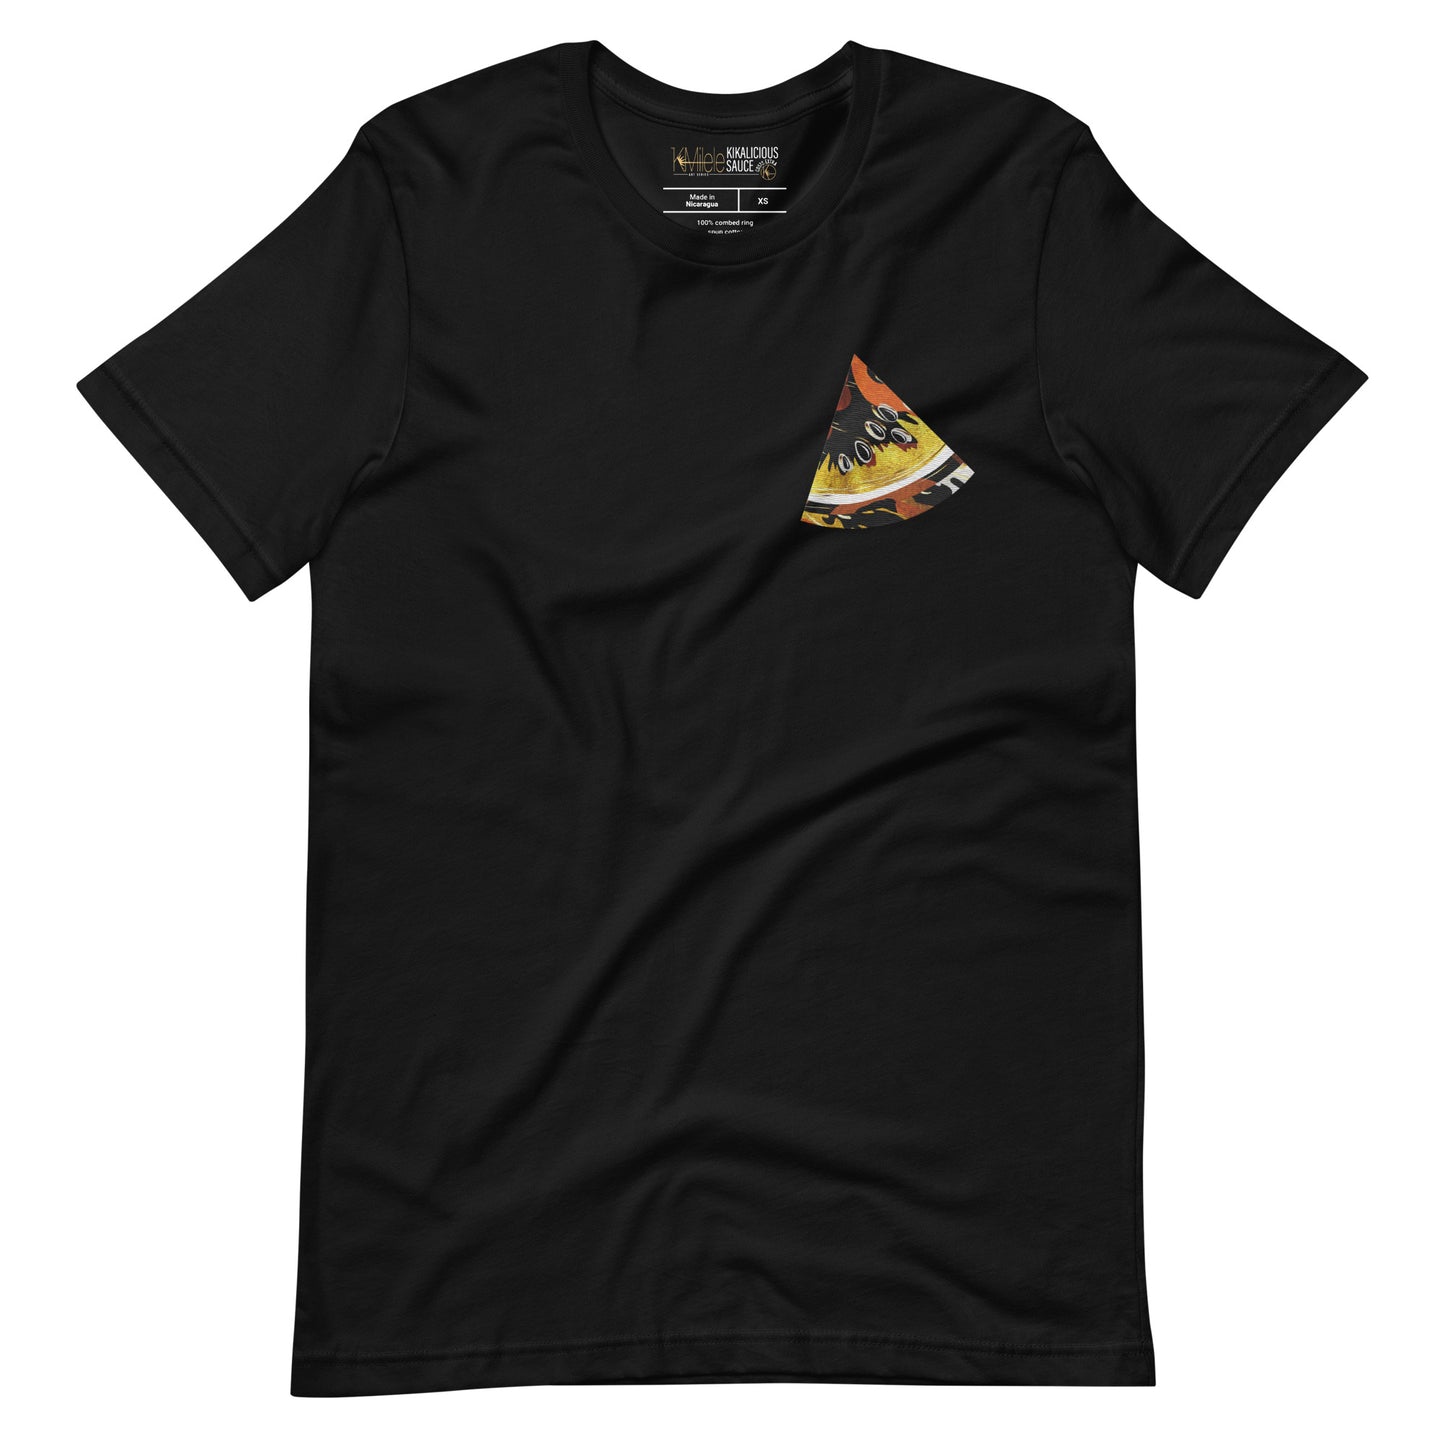 T-Shirt - Watermelon Slice